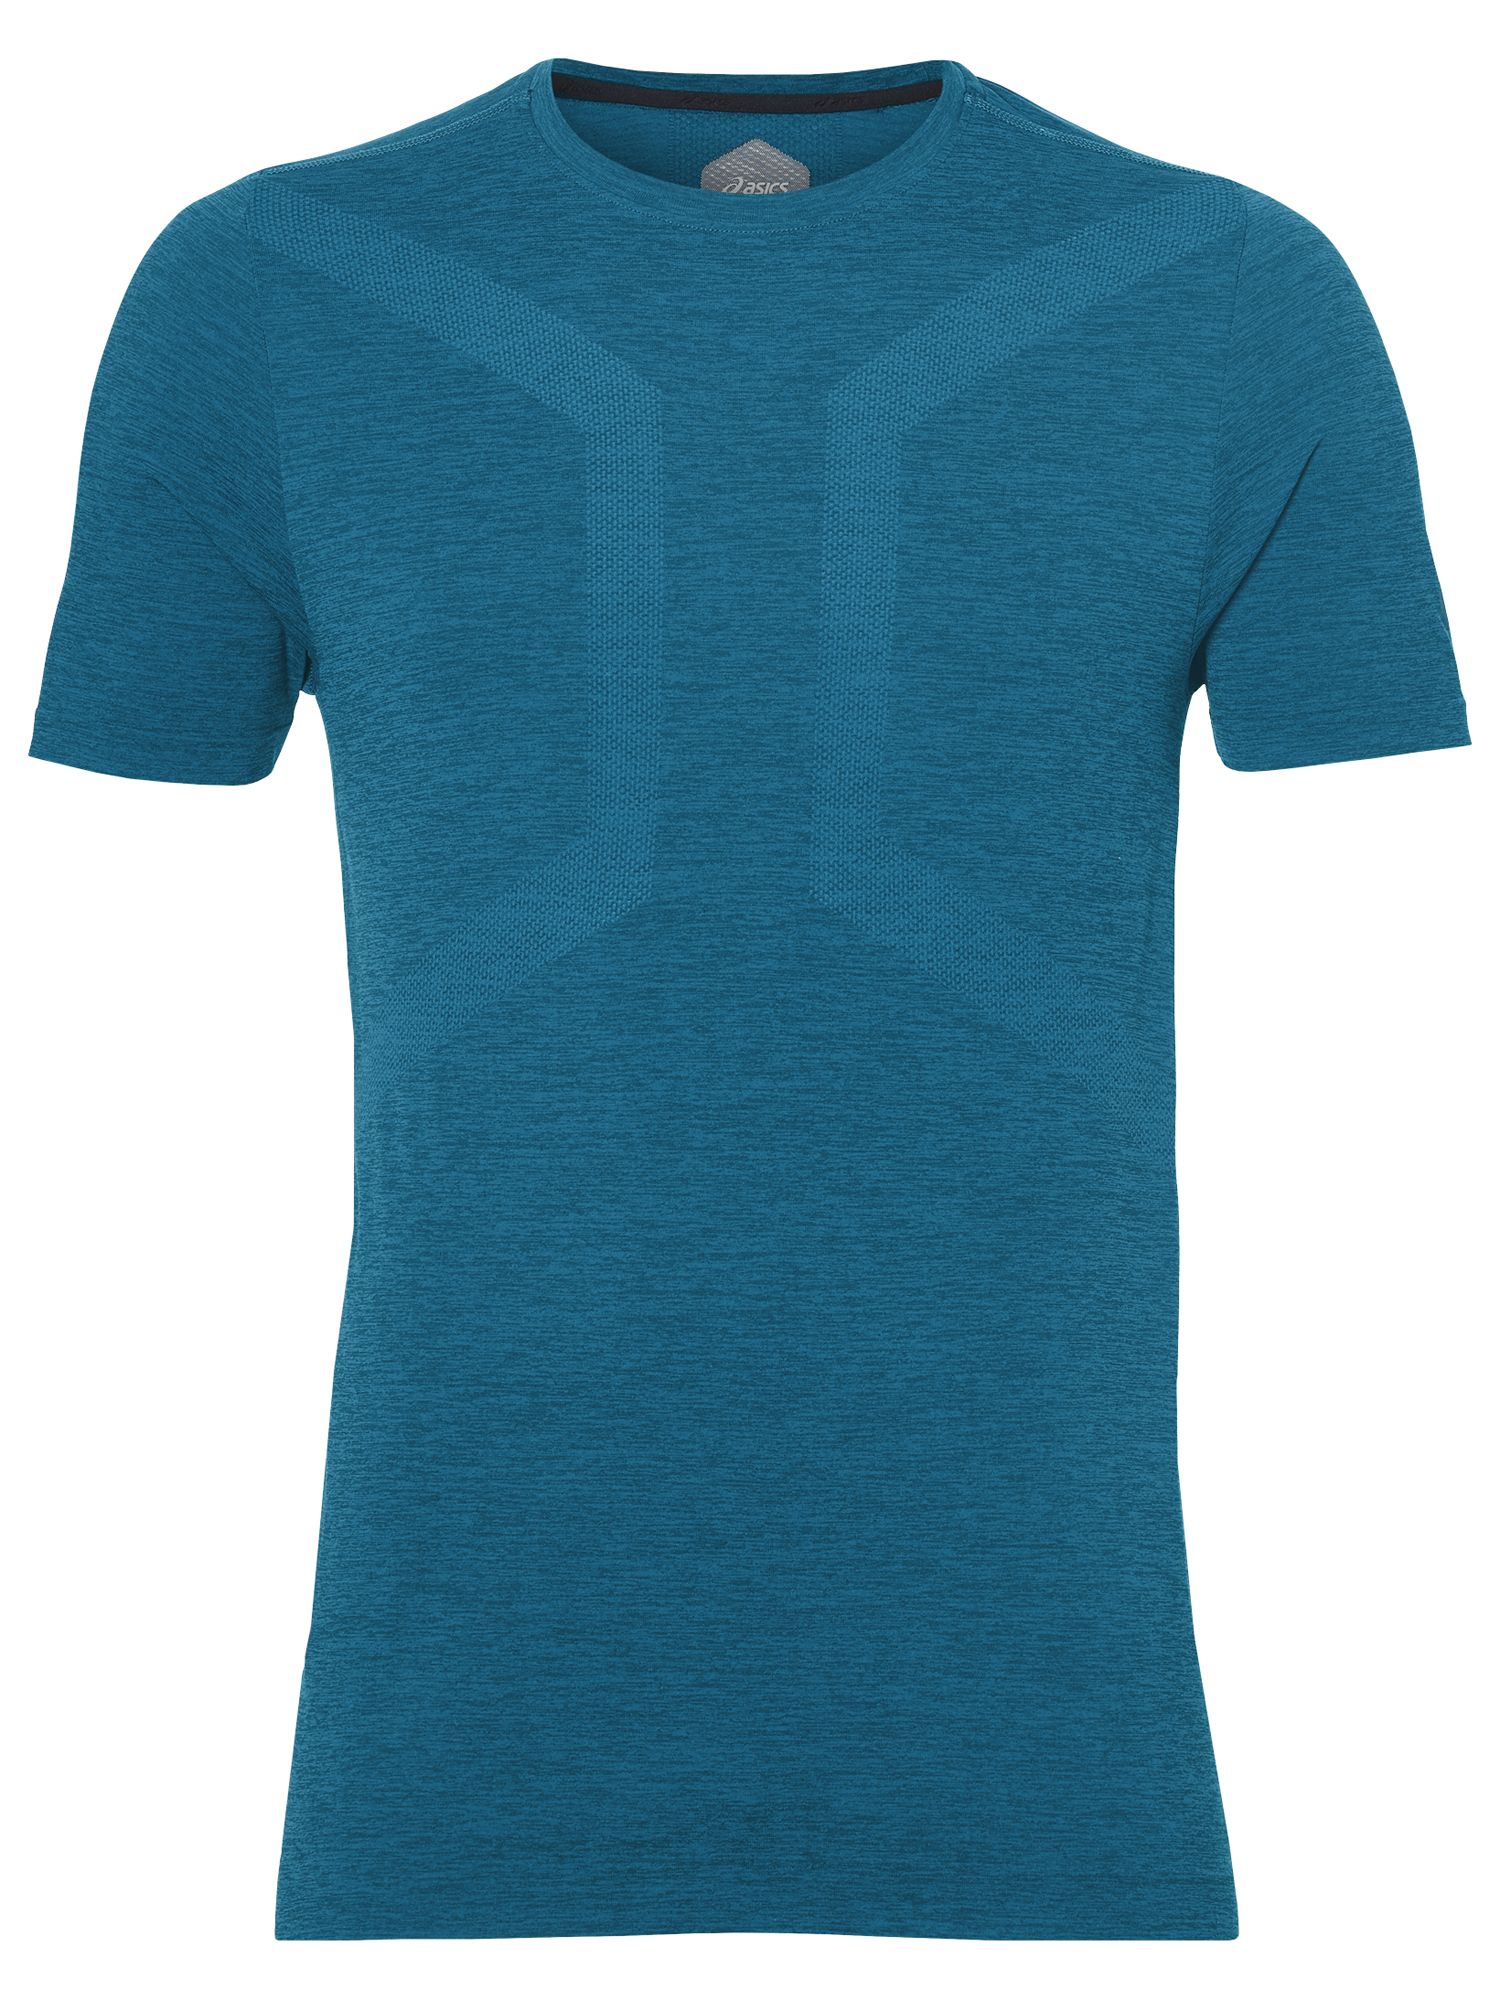 Asics Seamless Short Sleeve Men's Running T-Shirt, Turkish Tile, S